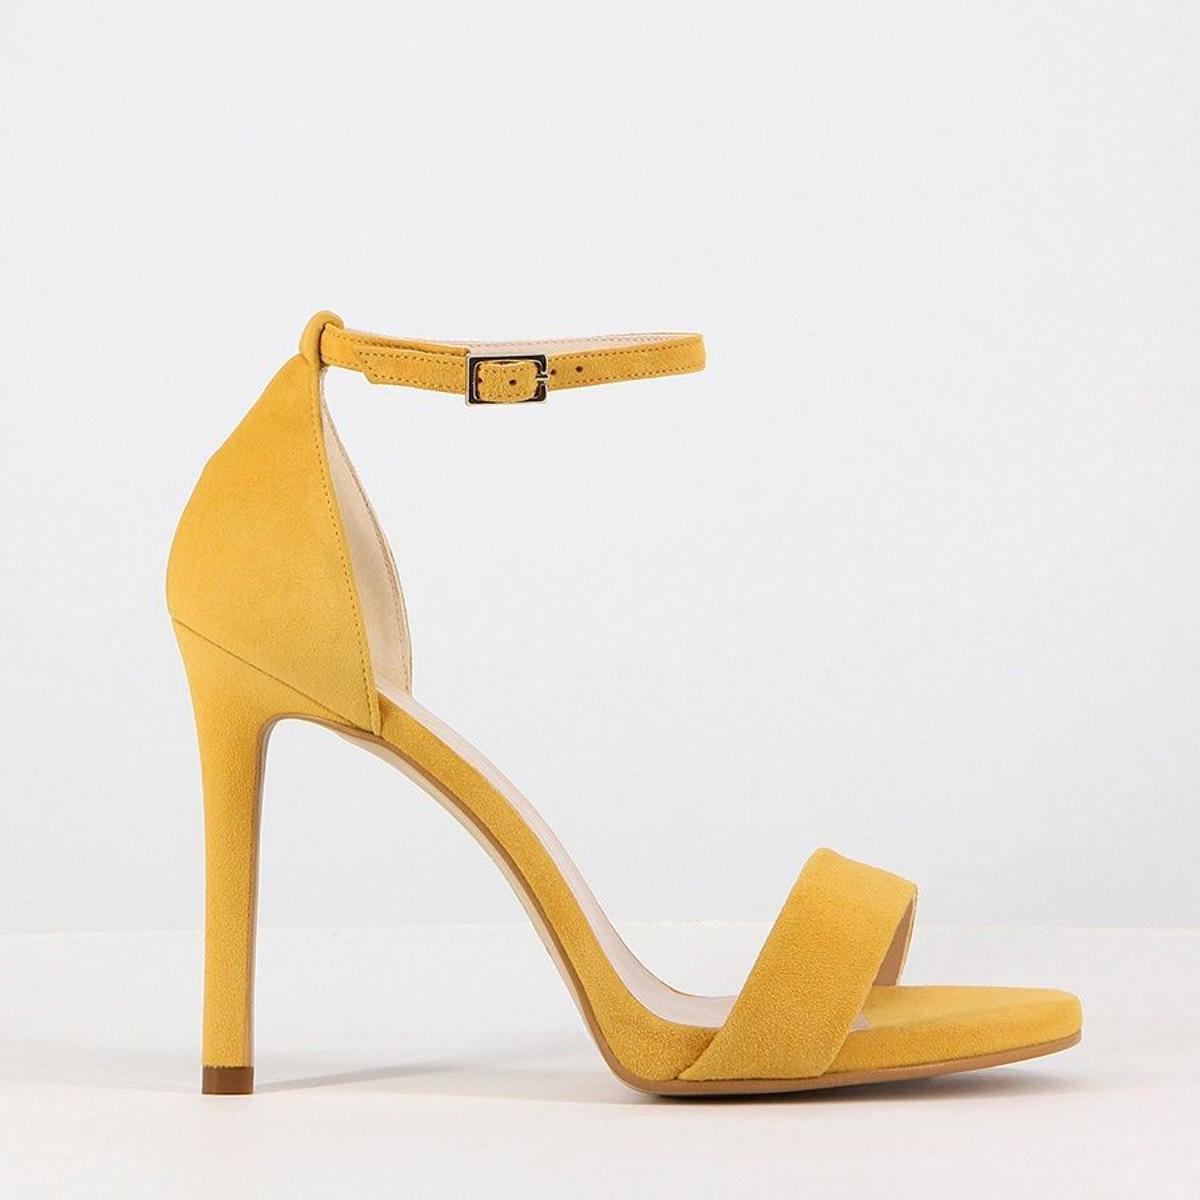 Zapatos de invitada: sandalia amarilla